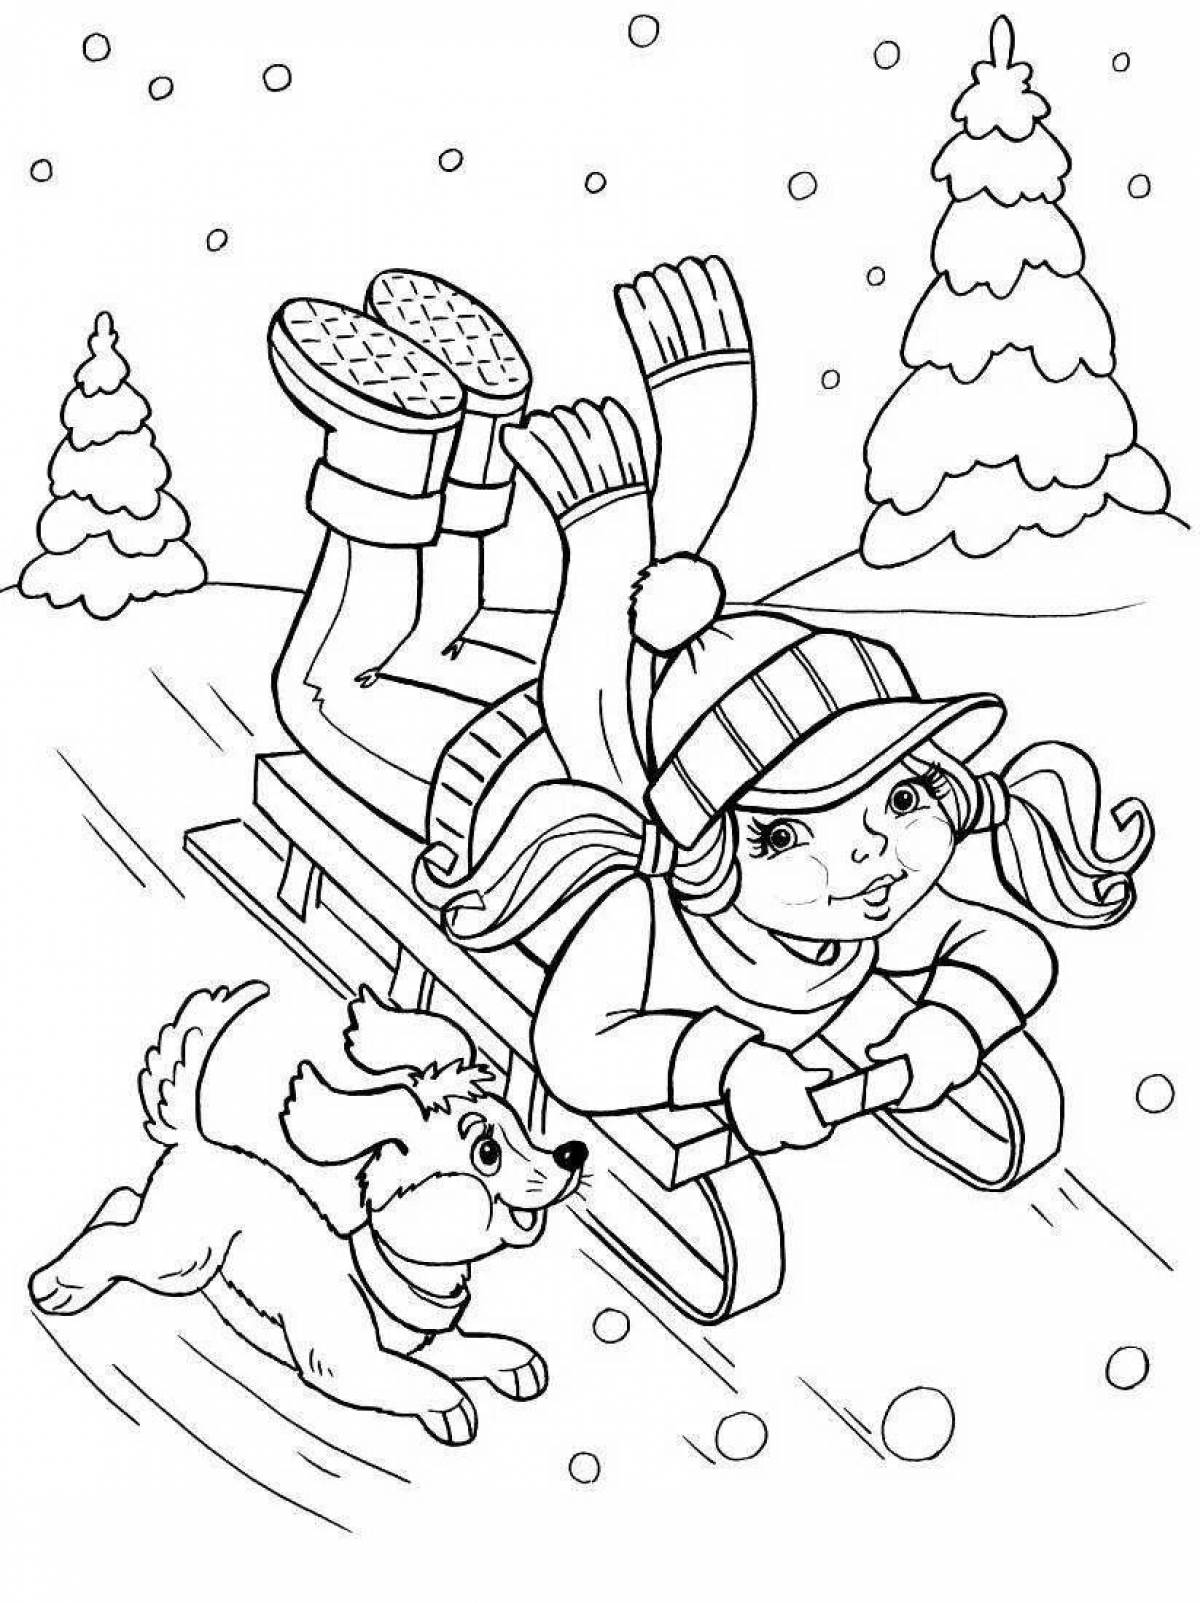 Delightful coloring drawing of winter fun